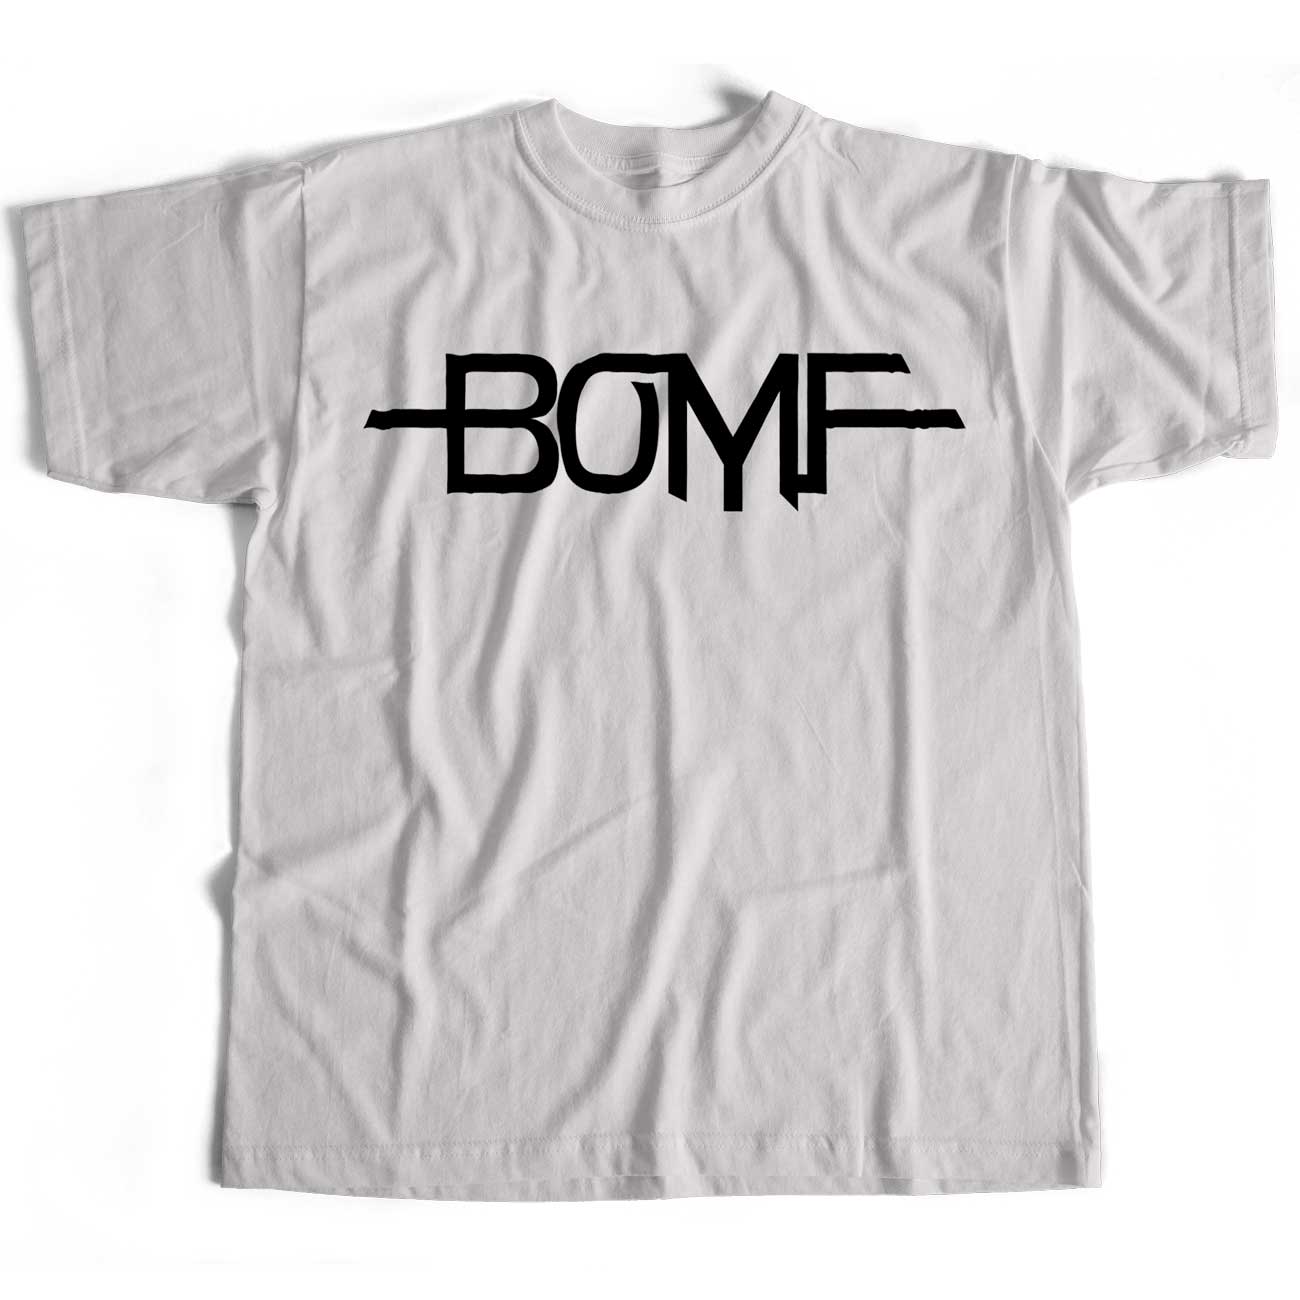 BOMF T shirt - Lennon's Final Band Cult Rock Rarity